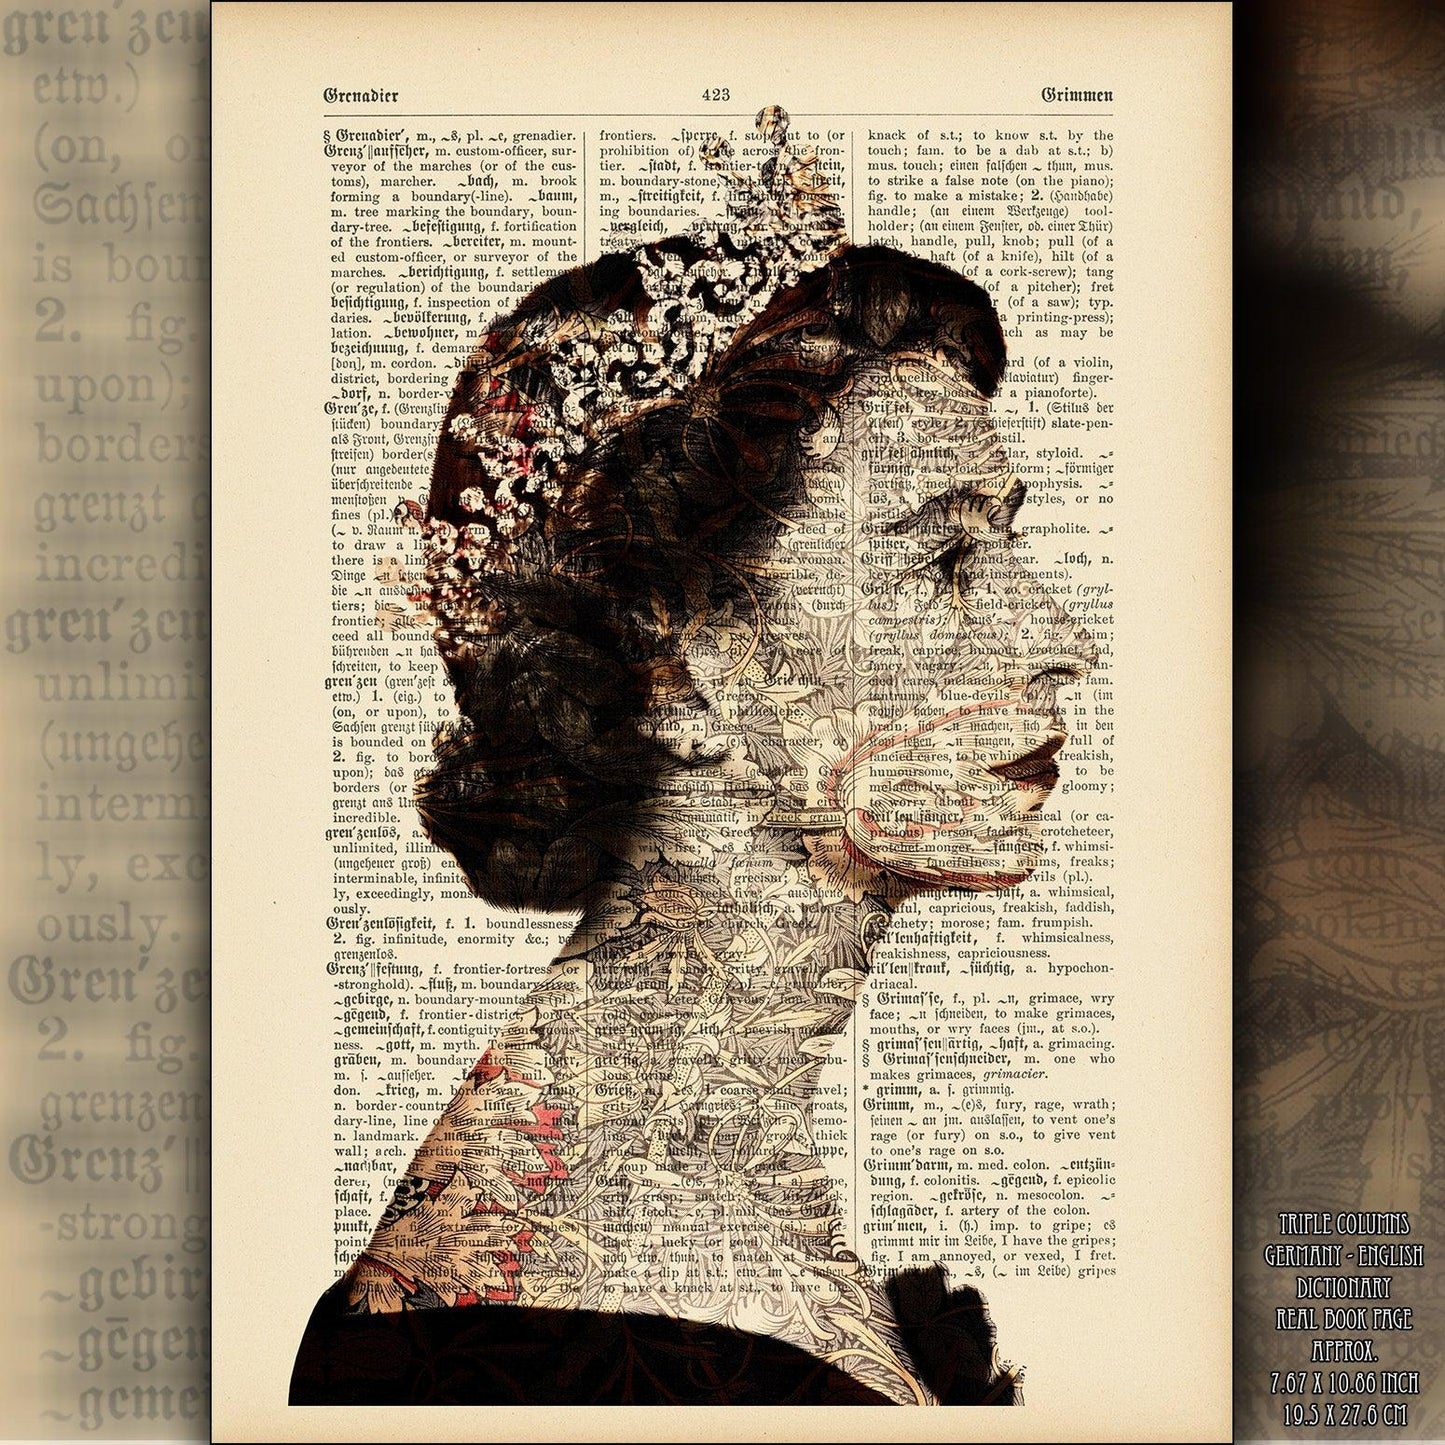 Queen Elizabeth II Flowers Pattern 3 Art on Vintage Dictionary Page - ArtCursor